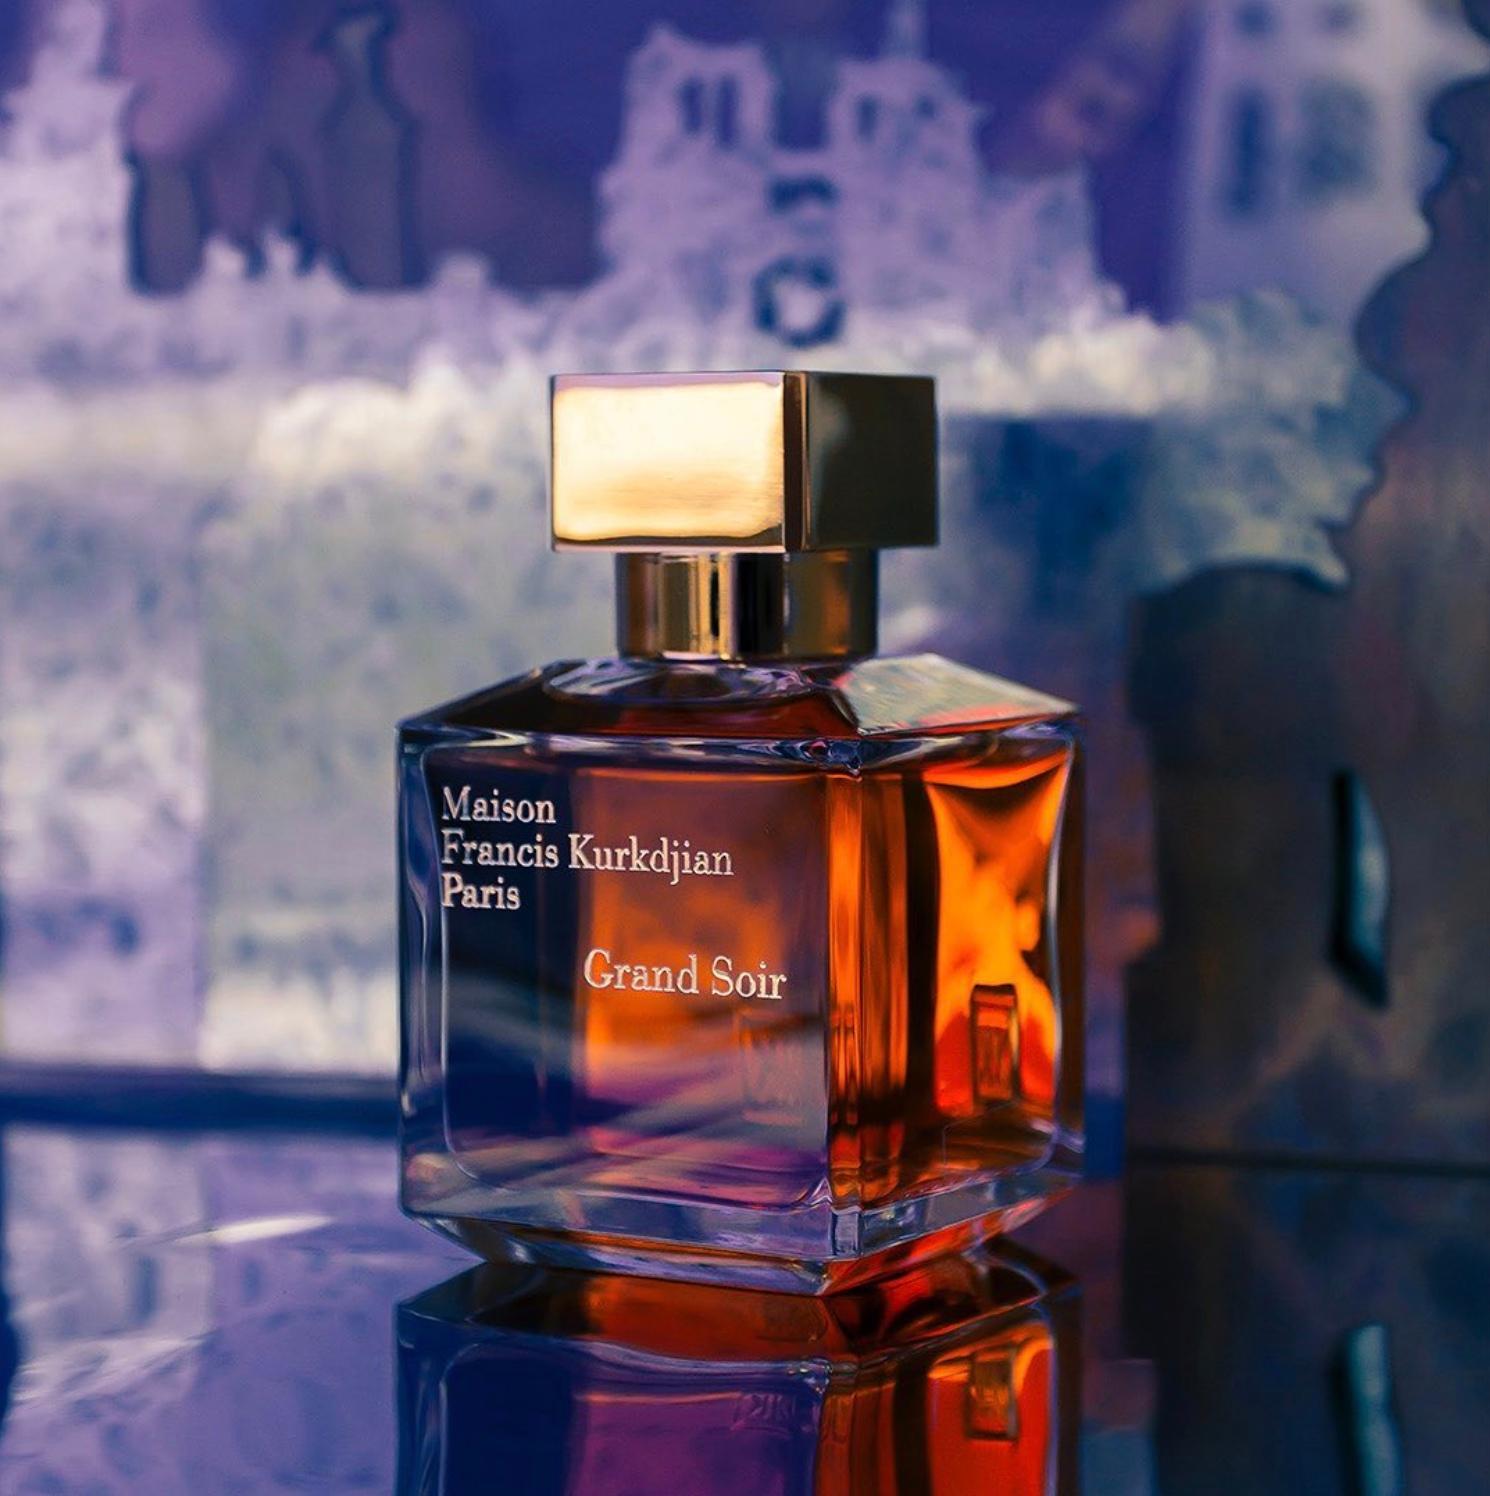 Maison Francis Kurkdjian - Grand Soir ambiance | Perfume Lounge